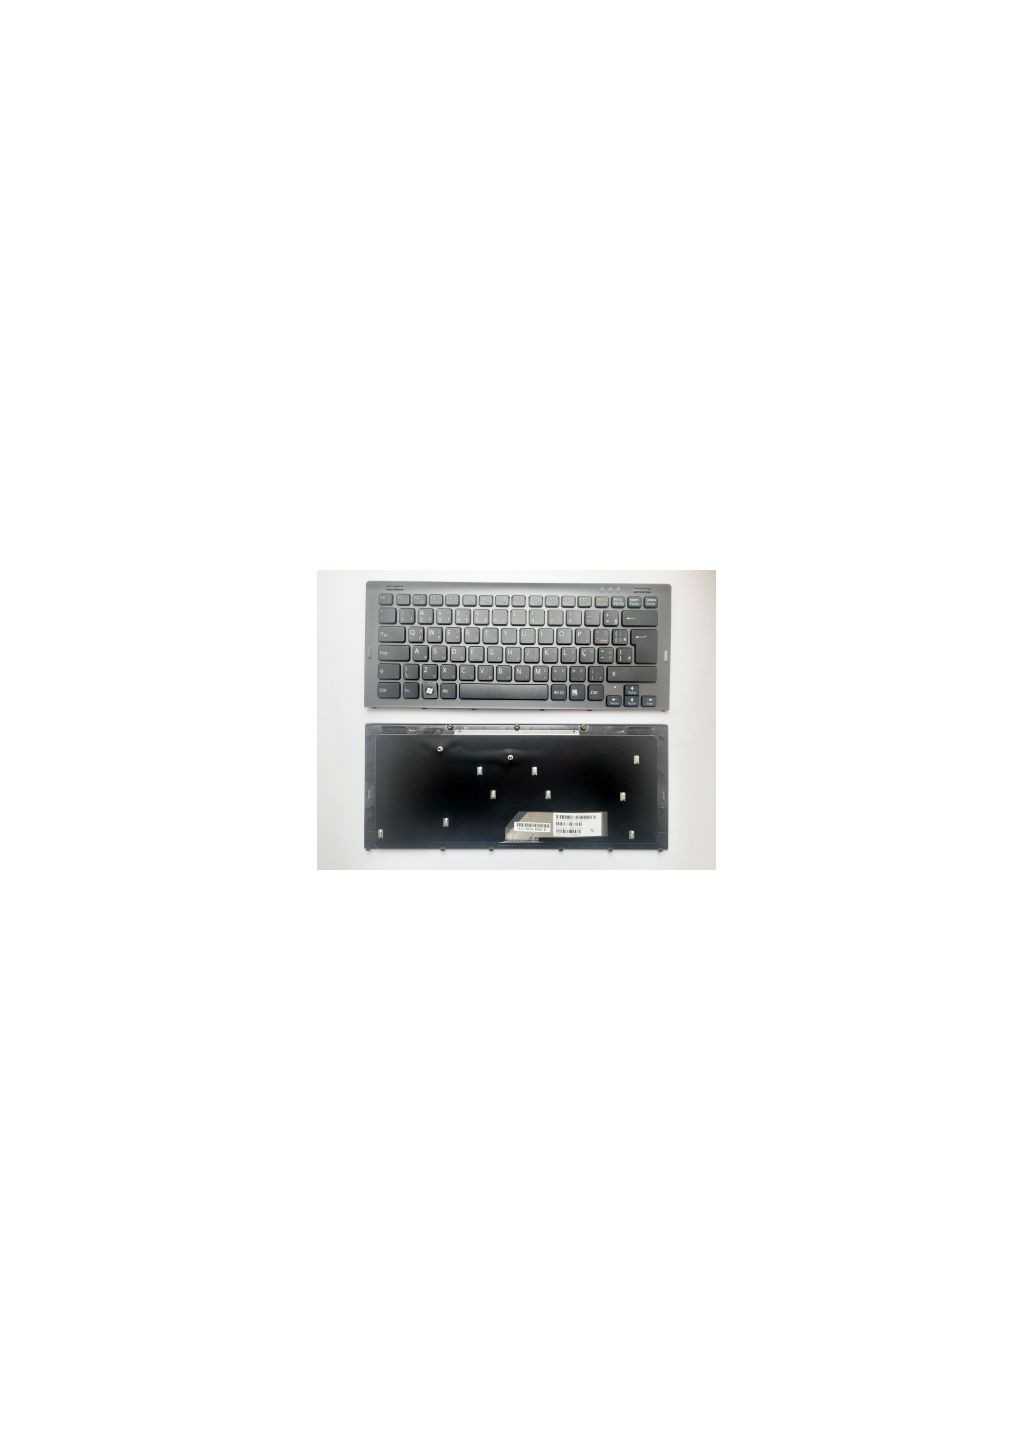 Клавиатура ноутбука VGNSR series черная с темно-серой рамкой UA (A43710) Sony vgn-sr series черная с темно-серой рамкой ua (276707394)